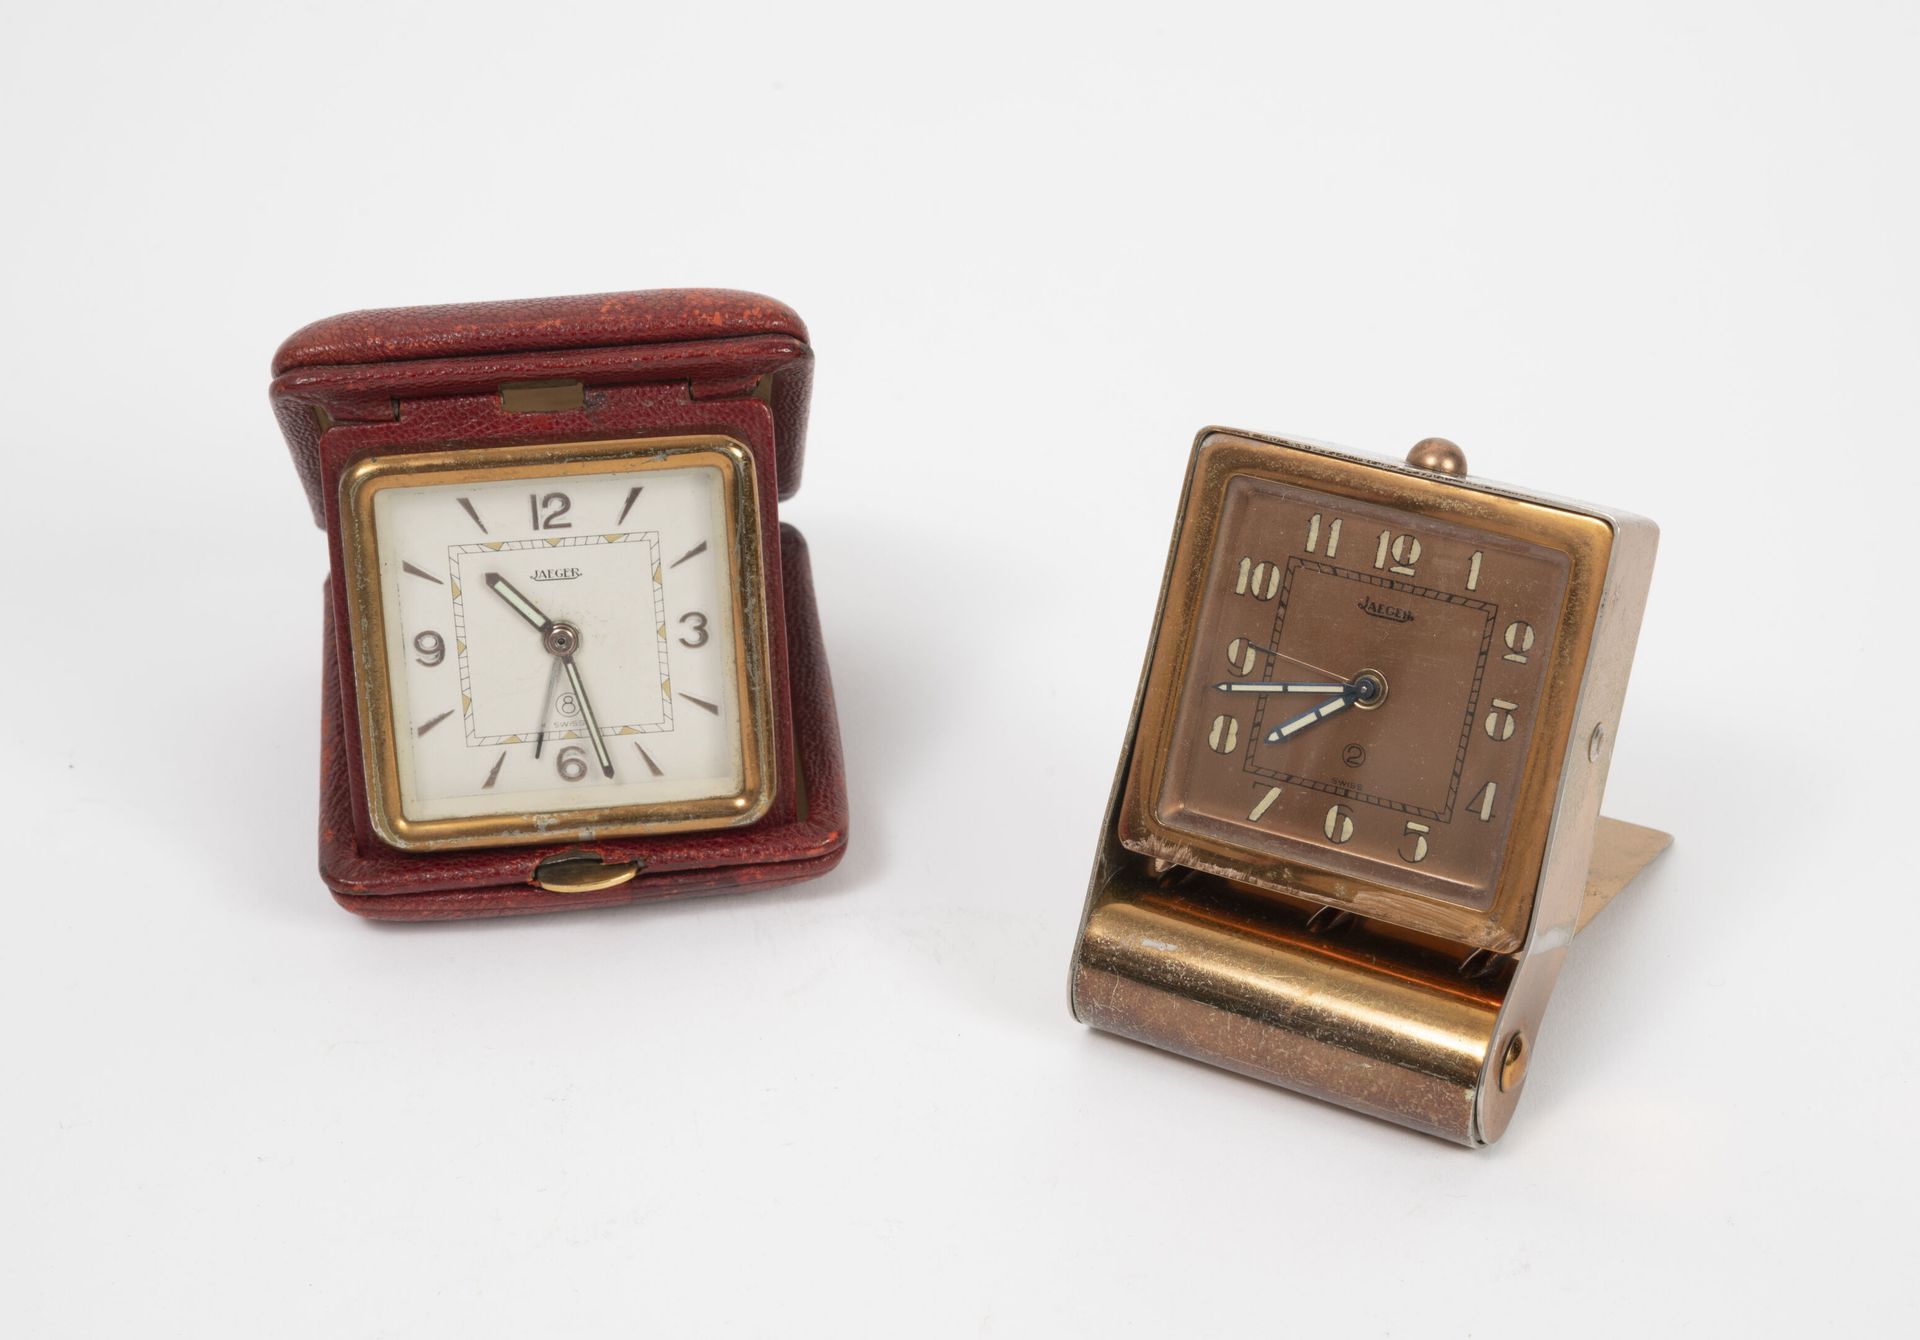 JAEGER LECOULTRE 两个镀金和镀铜金属的旅行钟。

- 一个是白色珐琅表盘，阿拉伯数字和时标。

机械机芯，手动上链。

装在一个红色的皮箱里。
&hellip;